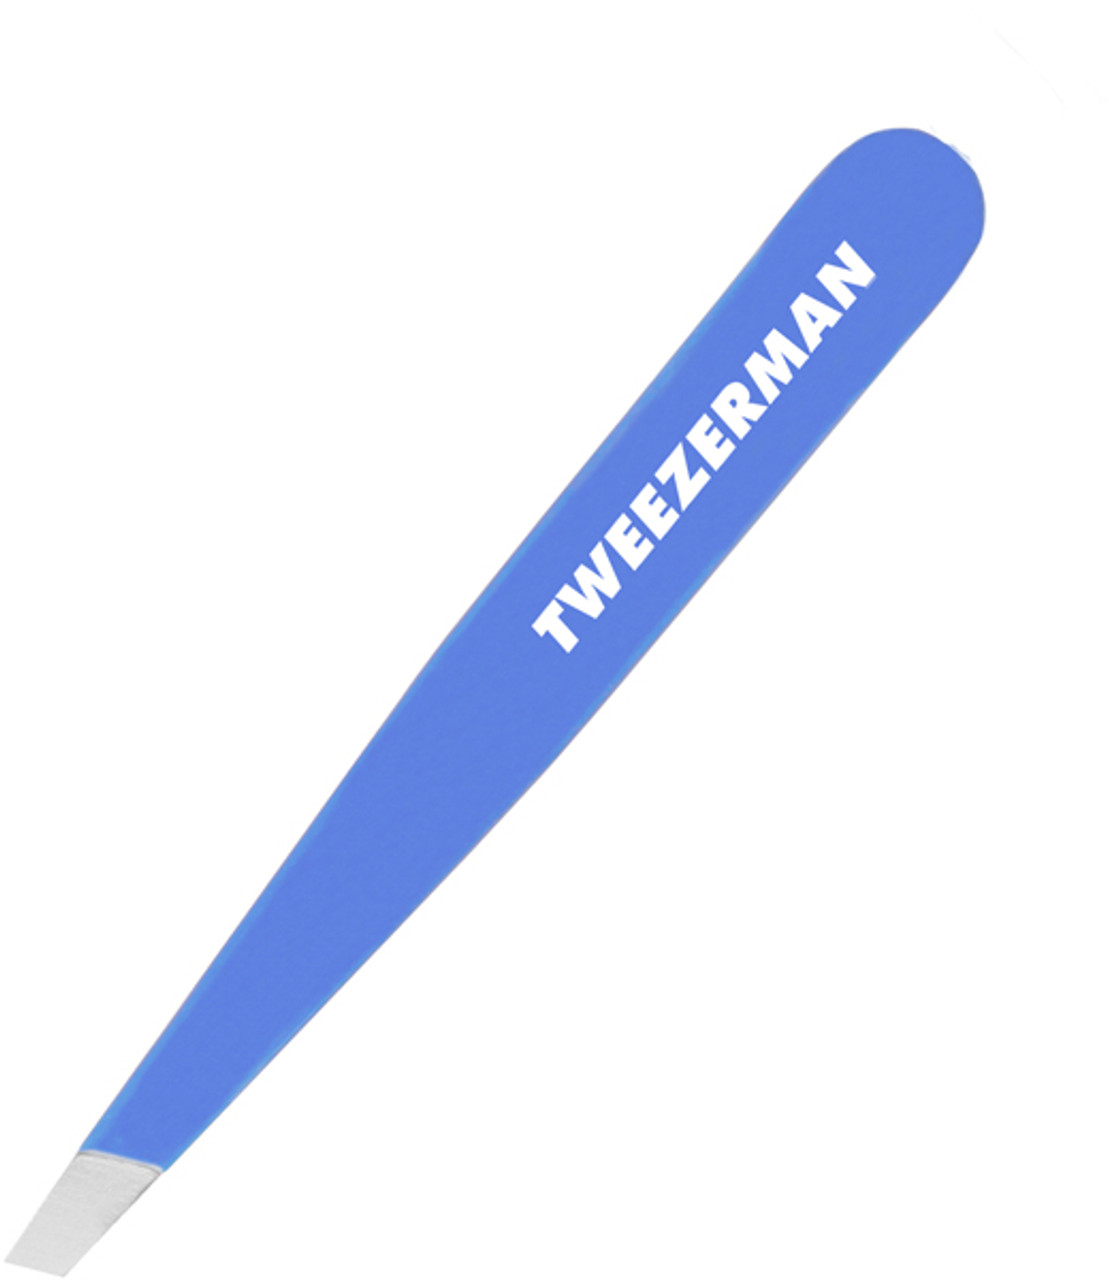 Tweezerman Professional Slant Tweezer - Royal Blue